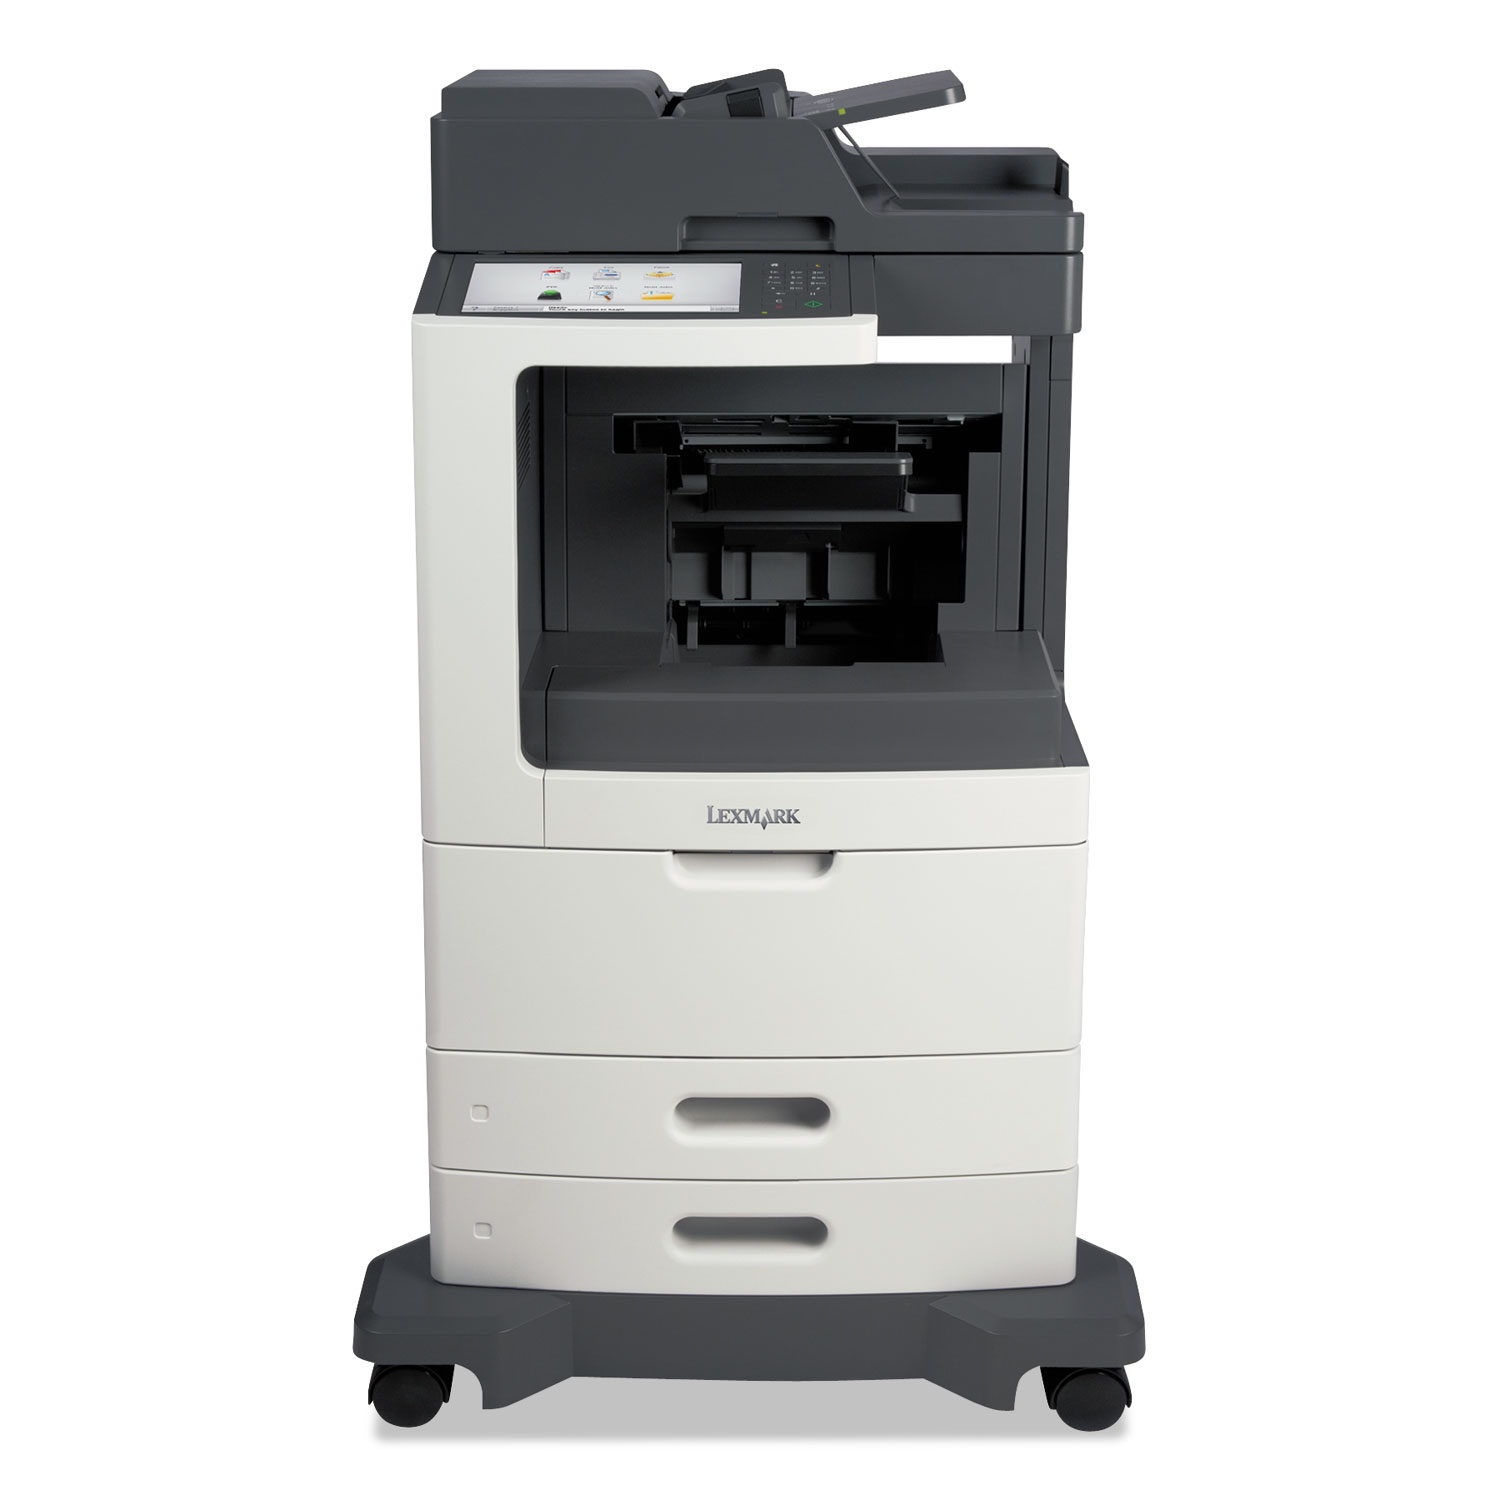 MX810dfe Multifunction Laser Printer, Copy/Fax/Print/Scan